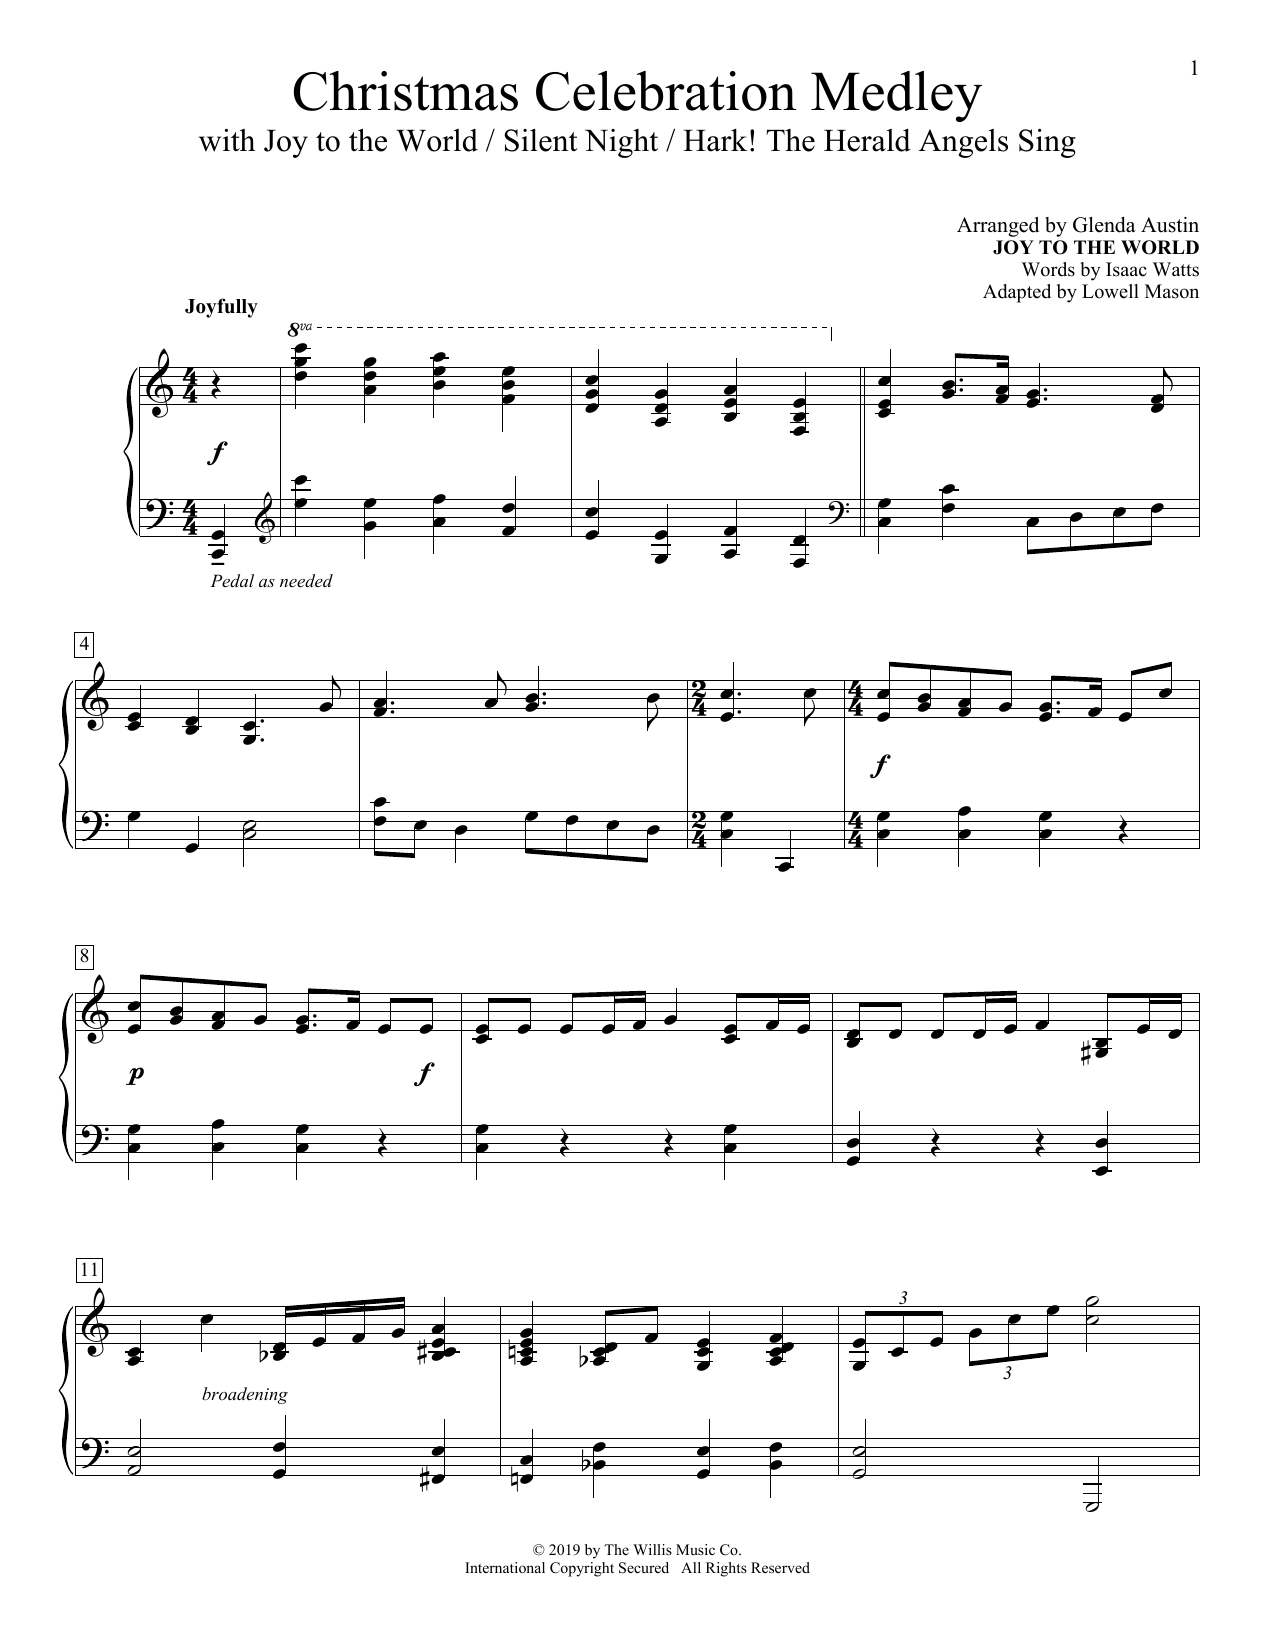 Glenda Austin Christmas Celebration Medley Sheet Music Notes & Chords for Piano Solo - Download or Print PDF